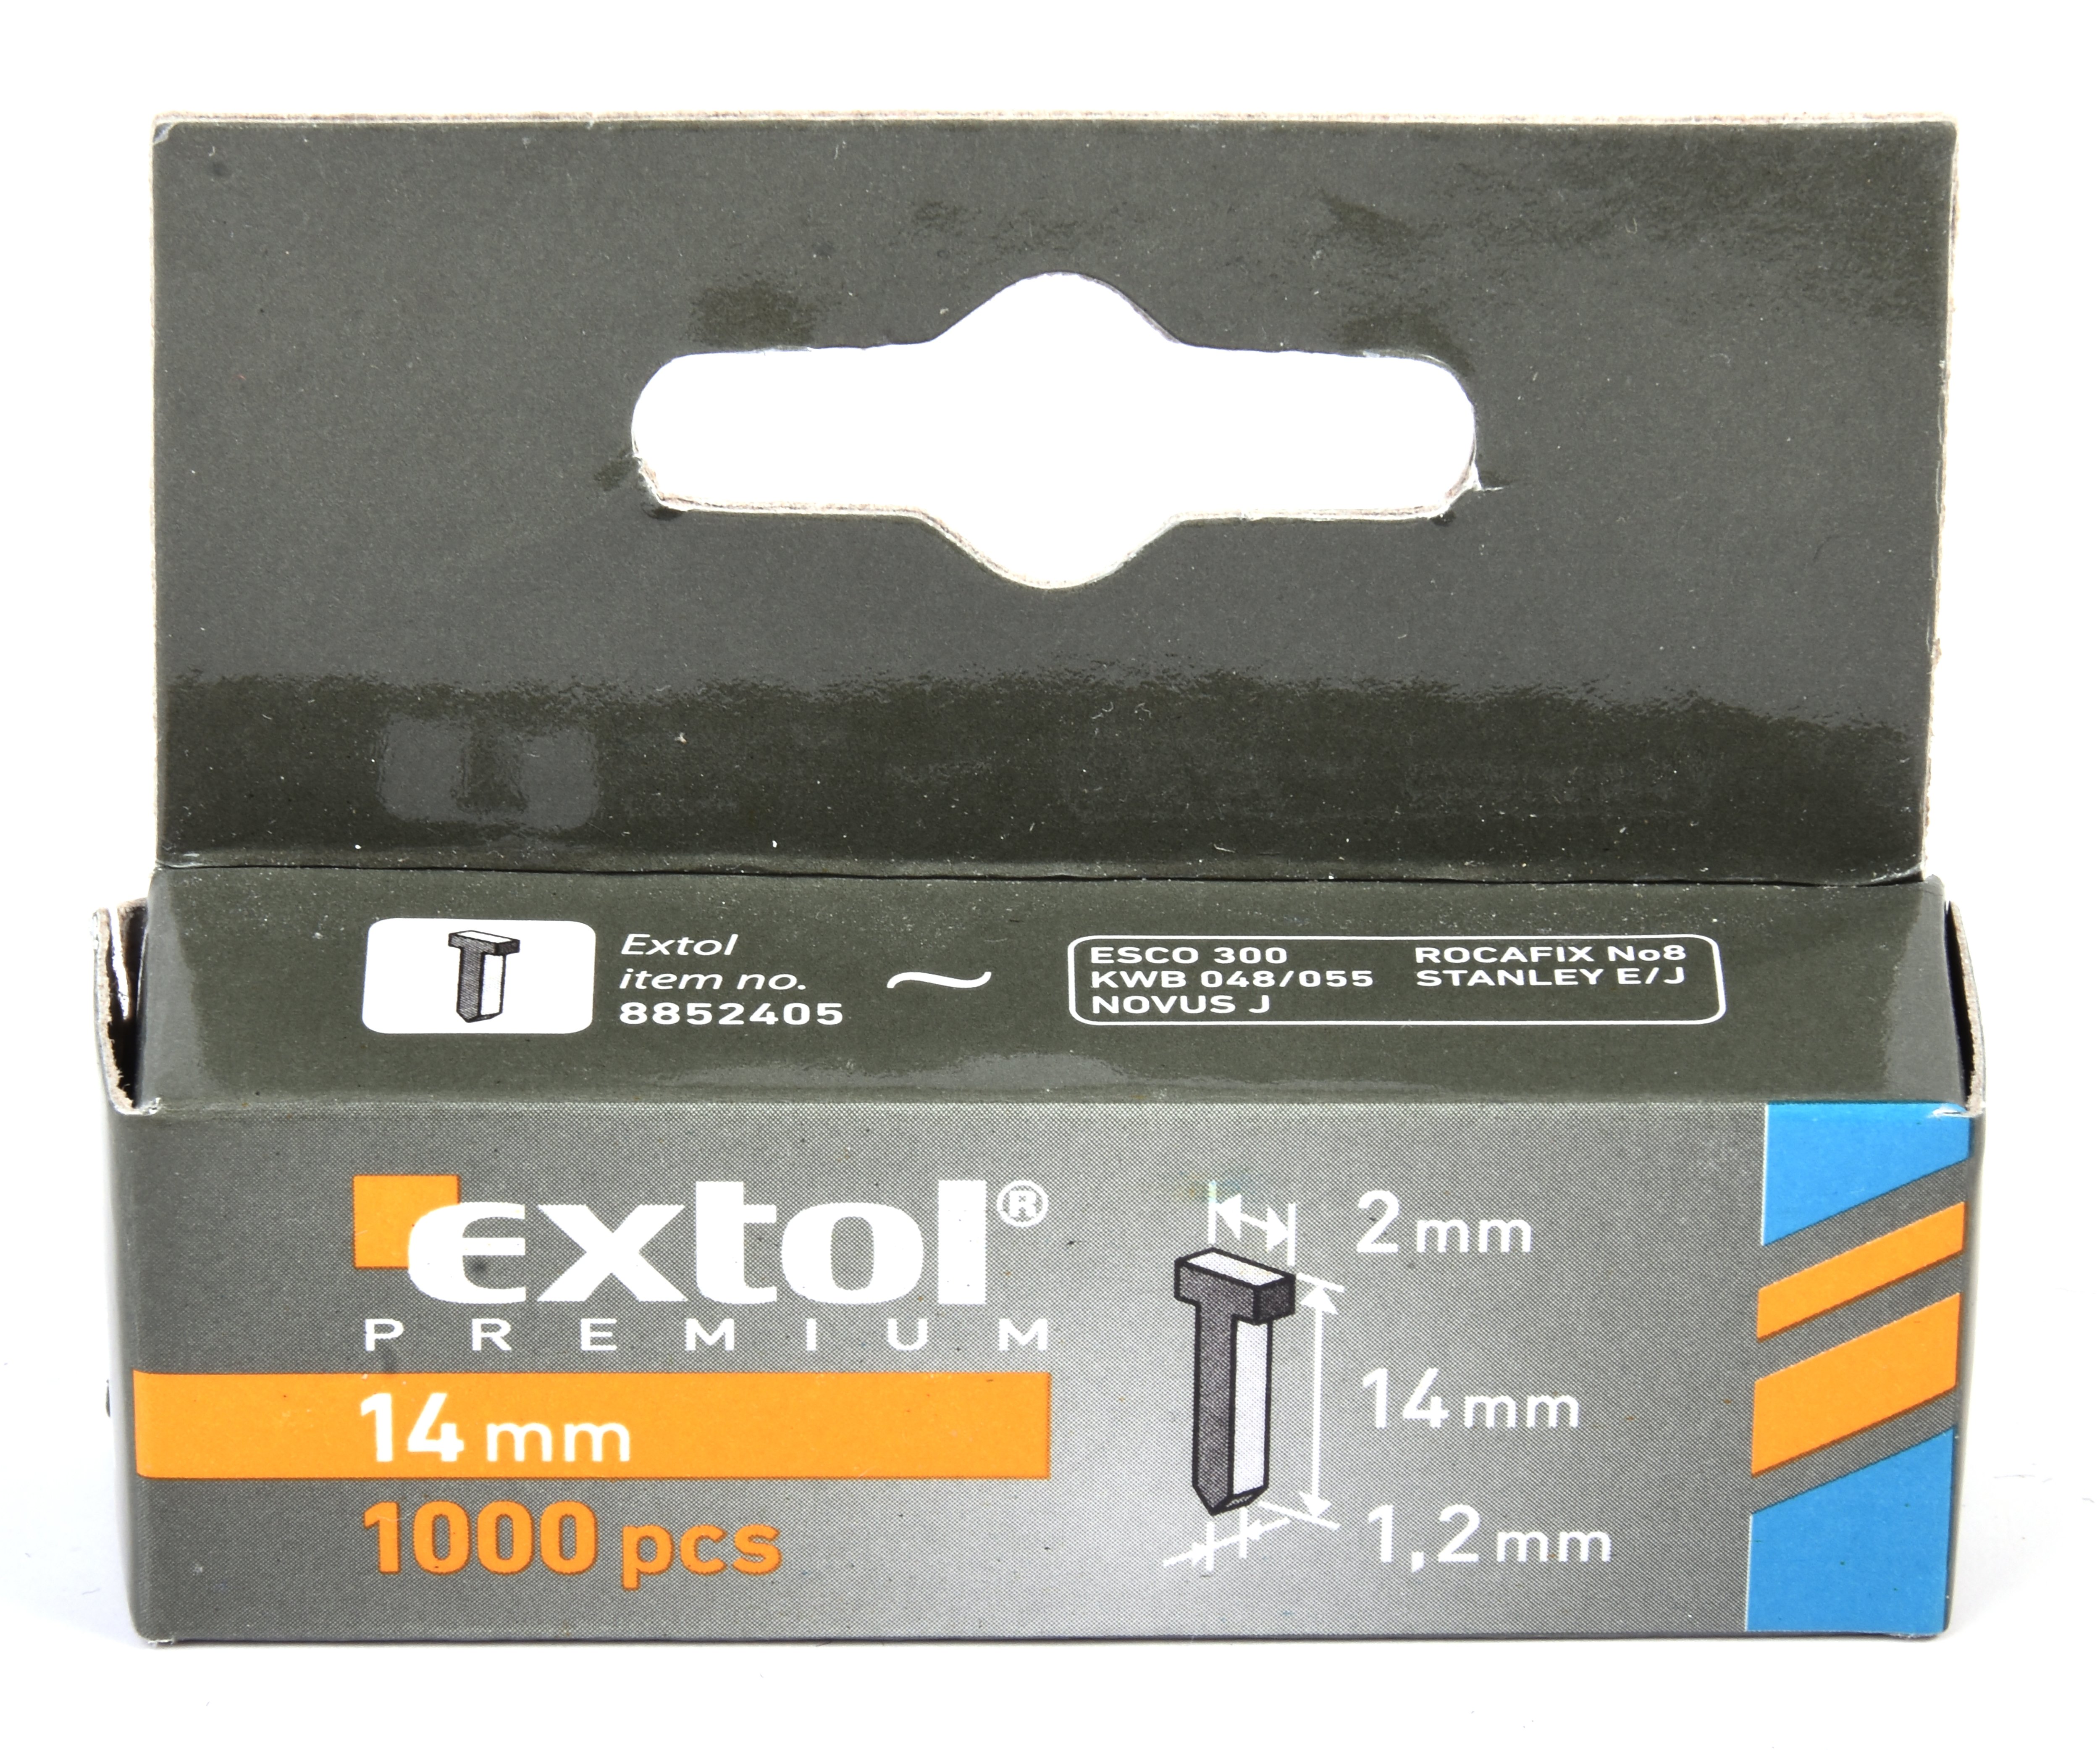 Hřebíky 1000ks Extol Premium - 8852404 12mm